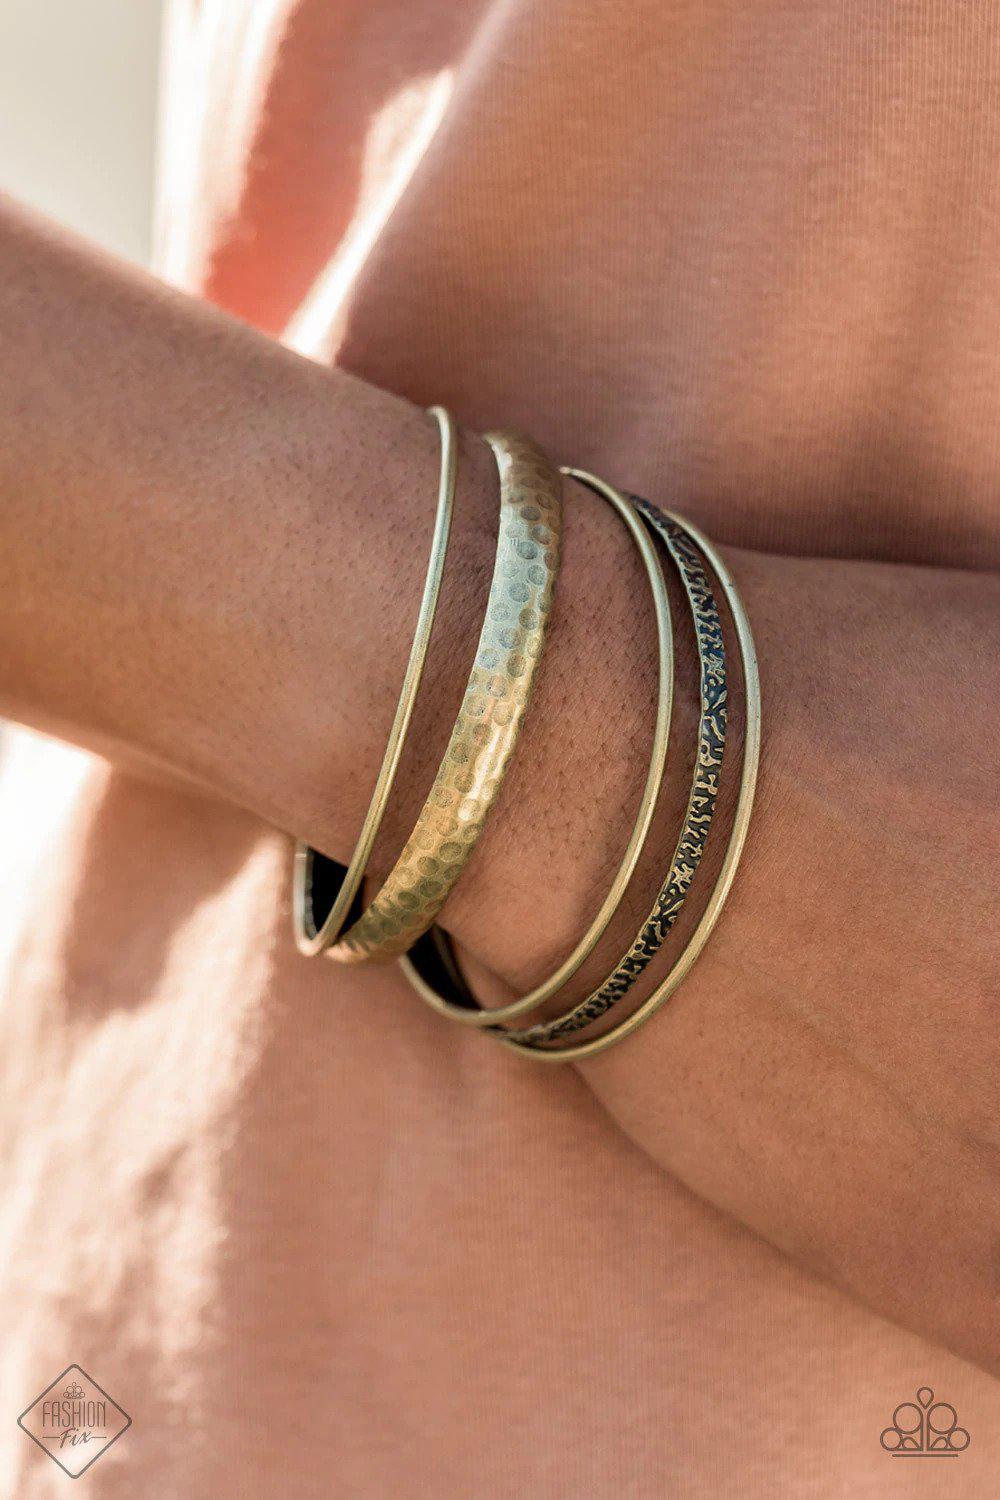 Get Into Gear Brass Bracelet - Paparazzi Accessories- lightbox - CarasShop.com - $5 Jewelry by Cara Jewels